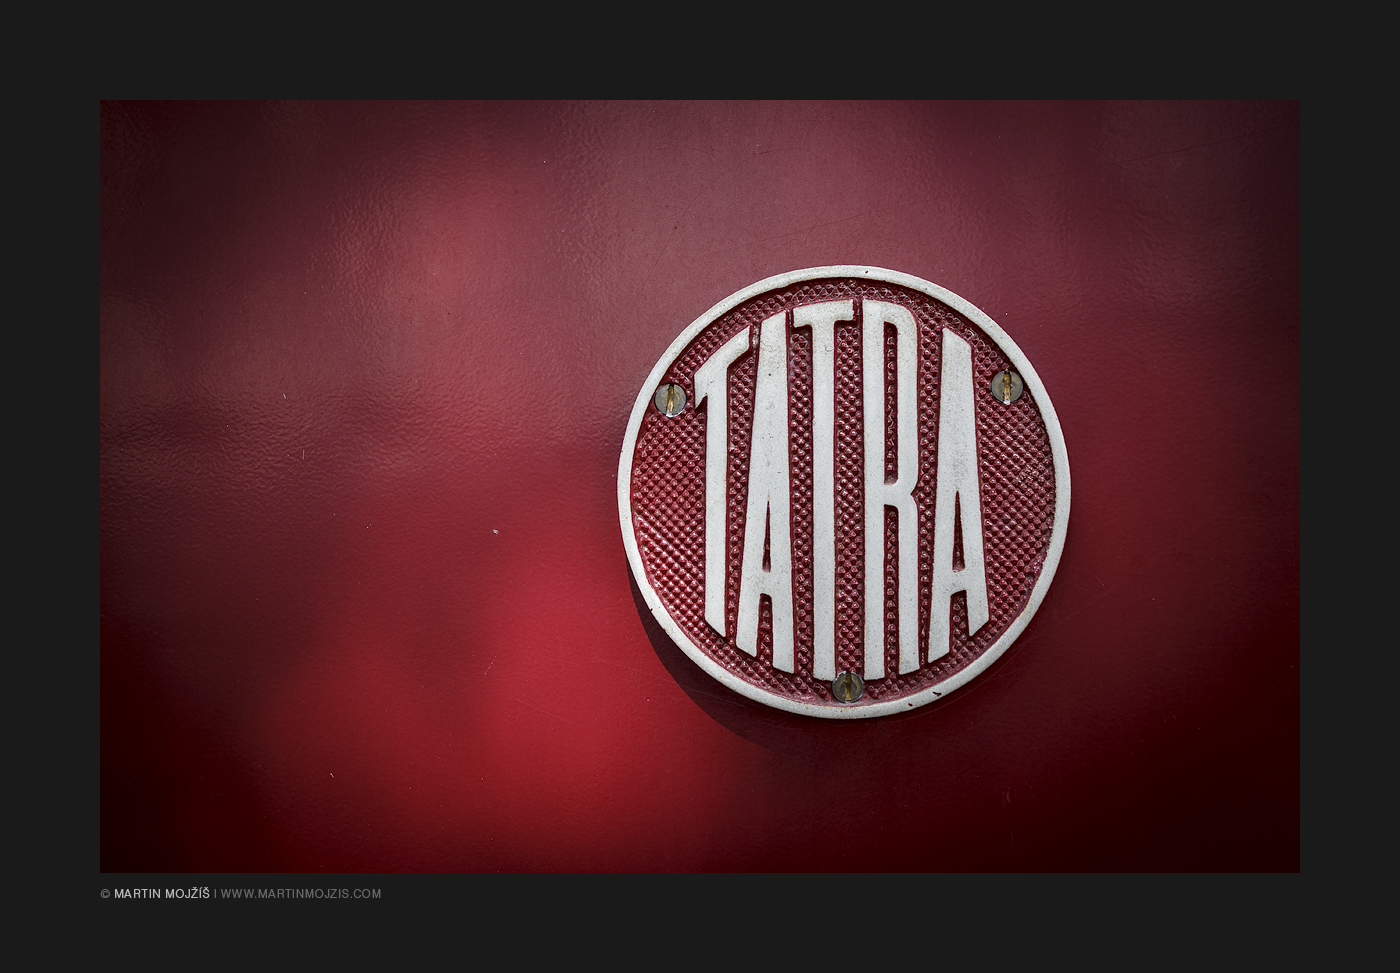 A TATRA emblem on a red engine train M131 1238 in a close-up view. Kolesovka 2017.